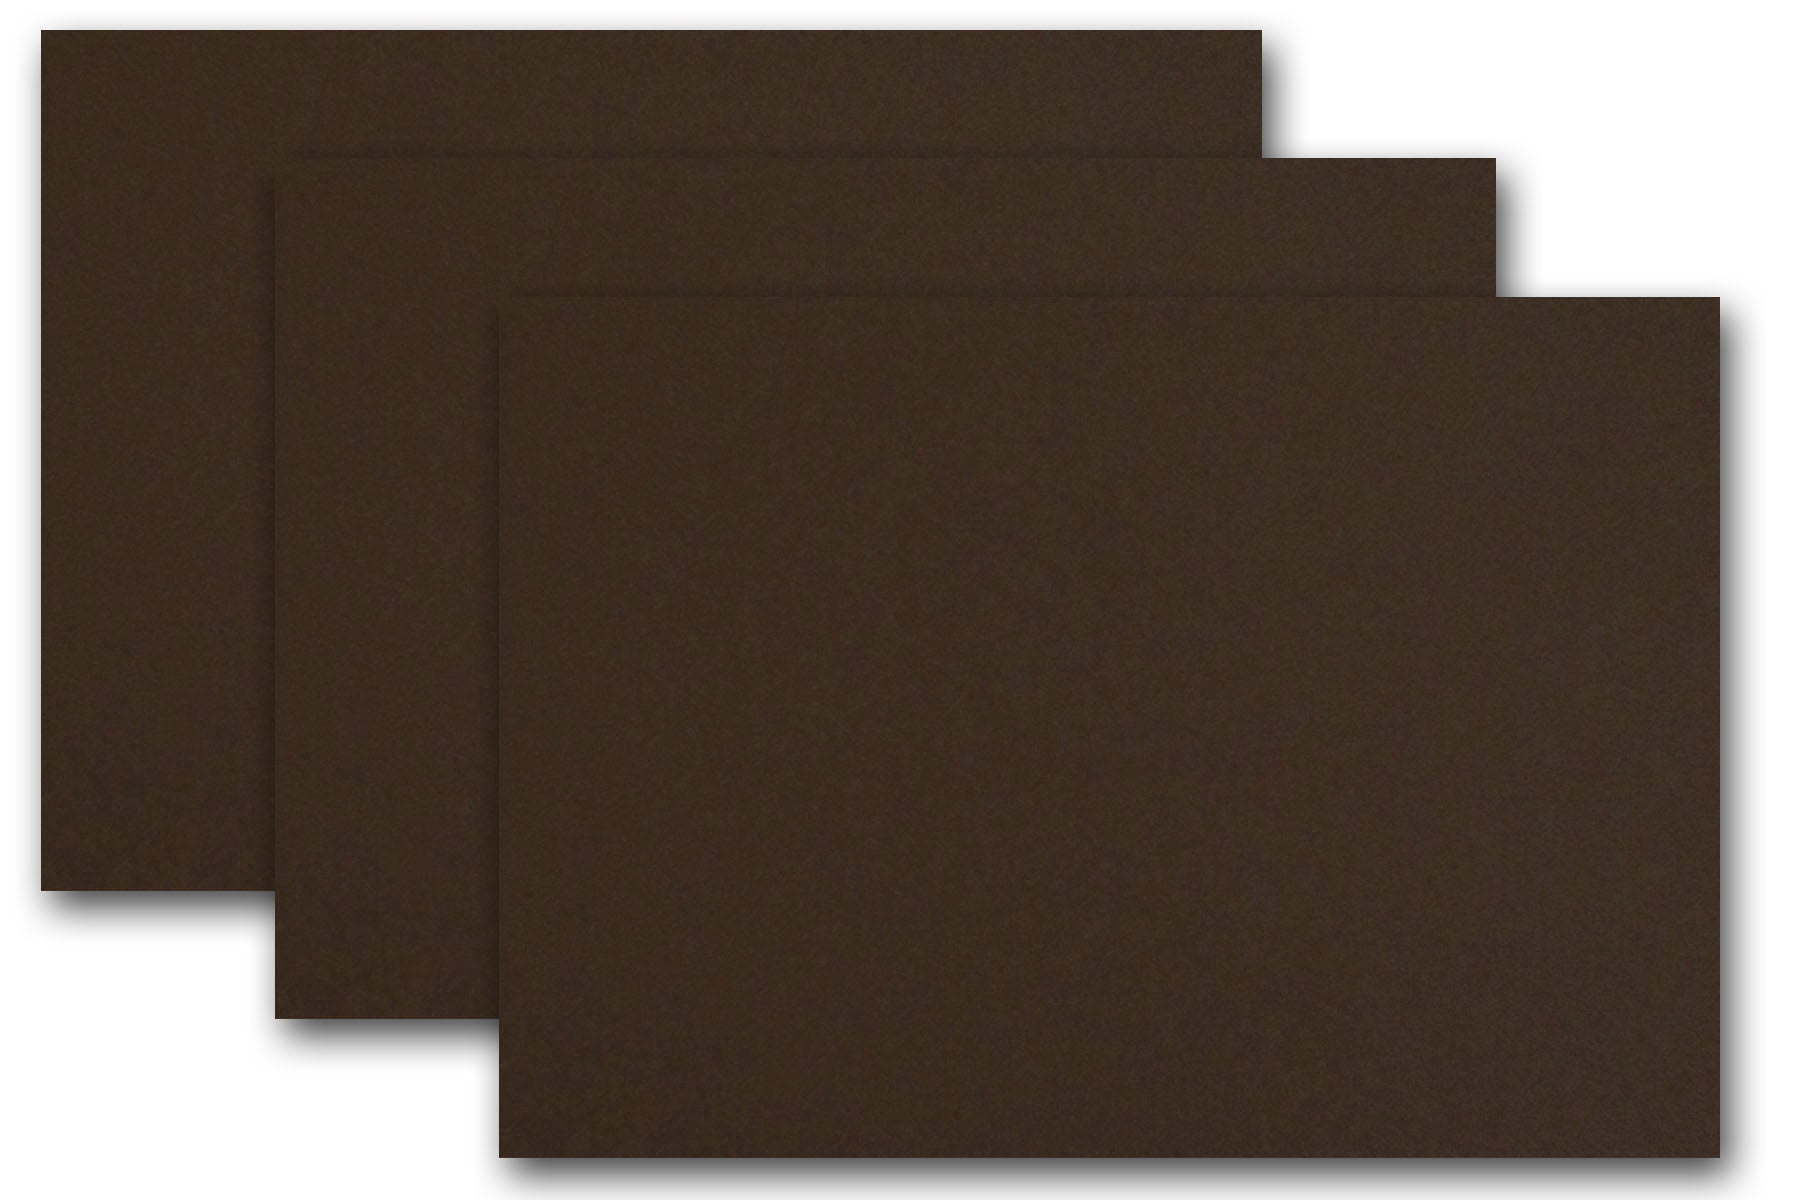  Cardstock Warehouse Pop Tone Red Hot Matte Premium Cardstock  Paper - 8.5 x 11 - 65 Lb. / 175 Gsm - 50 Sheets : Arts, Crafts & Sewing